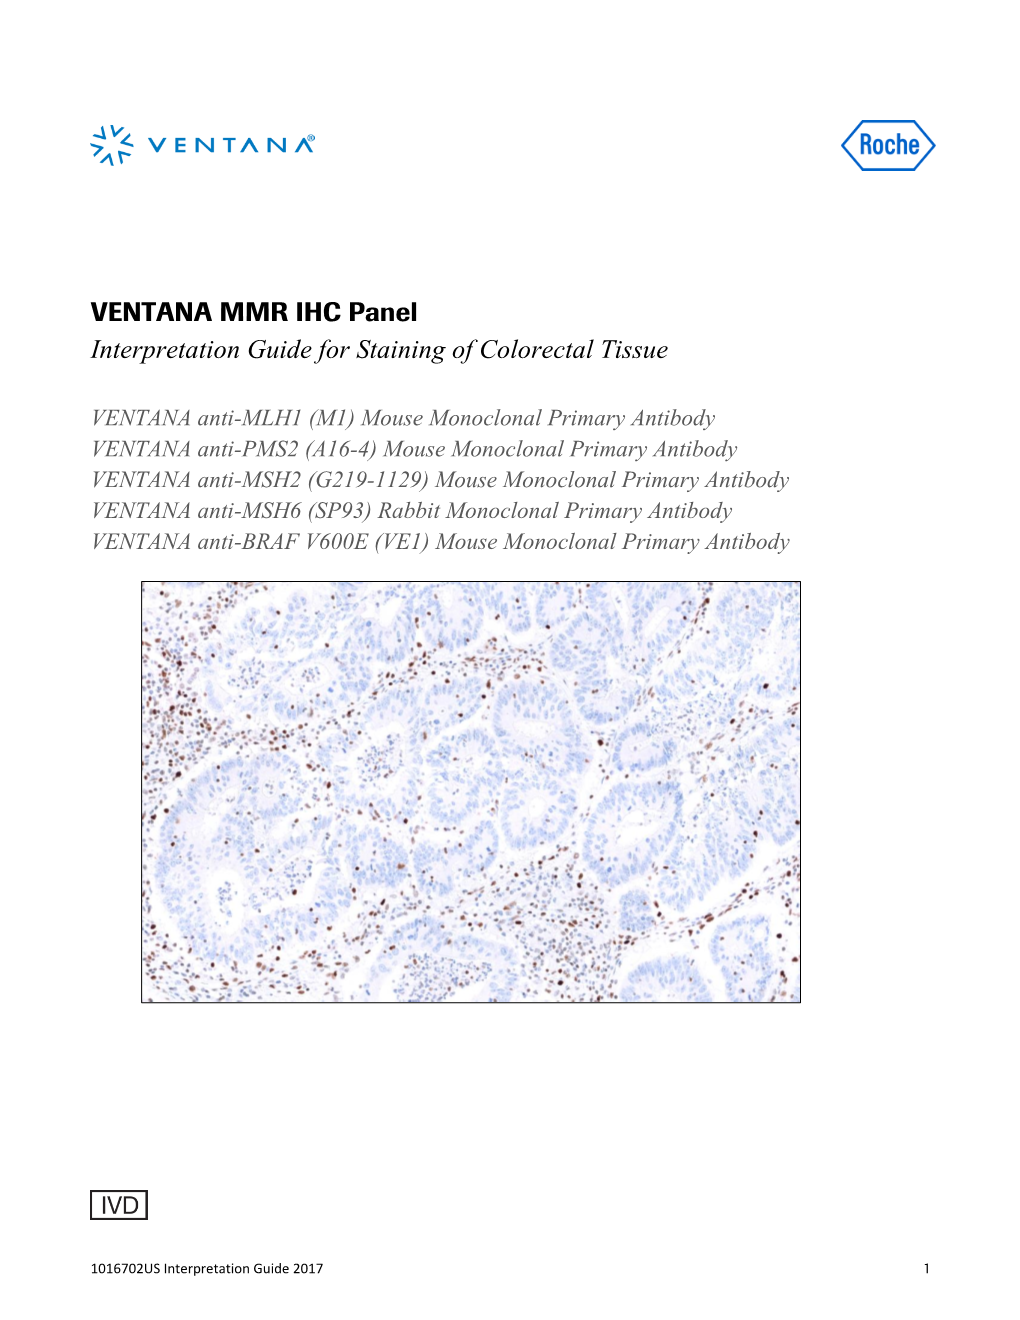 VENTANA MMR IHC Panel Interpretation Guide for Staining of Colorectal Tissue